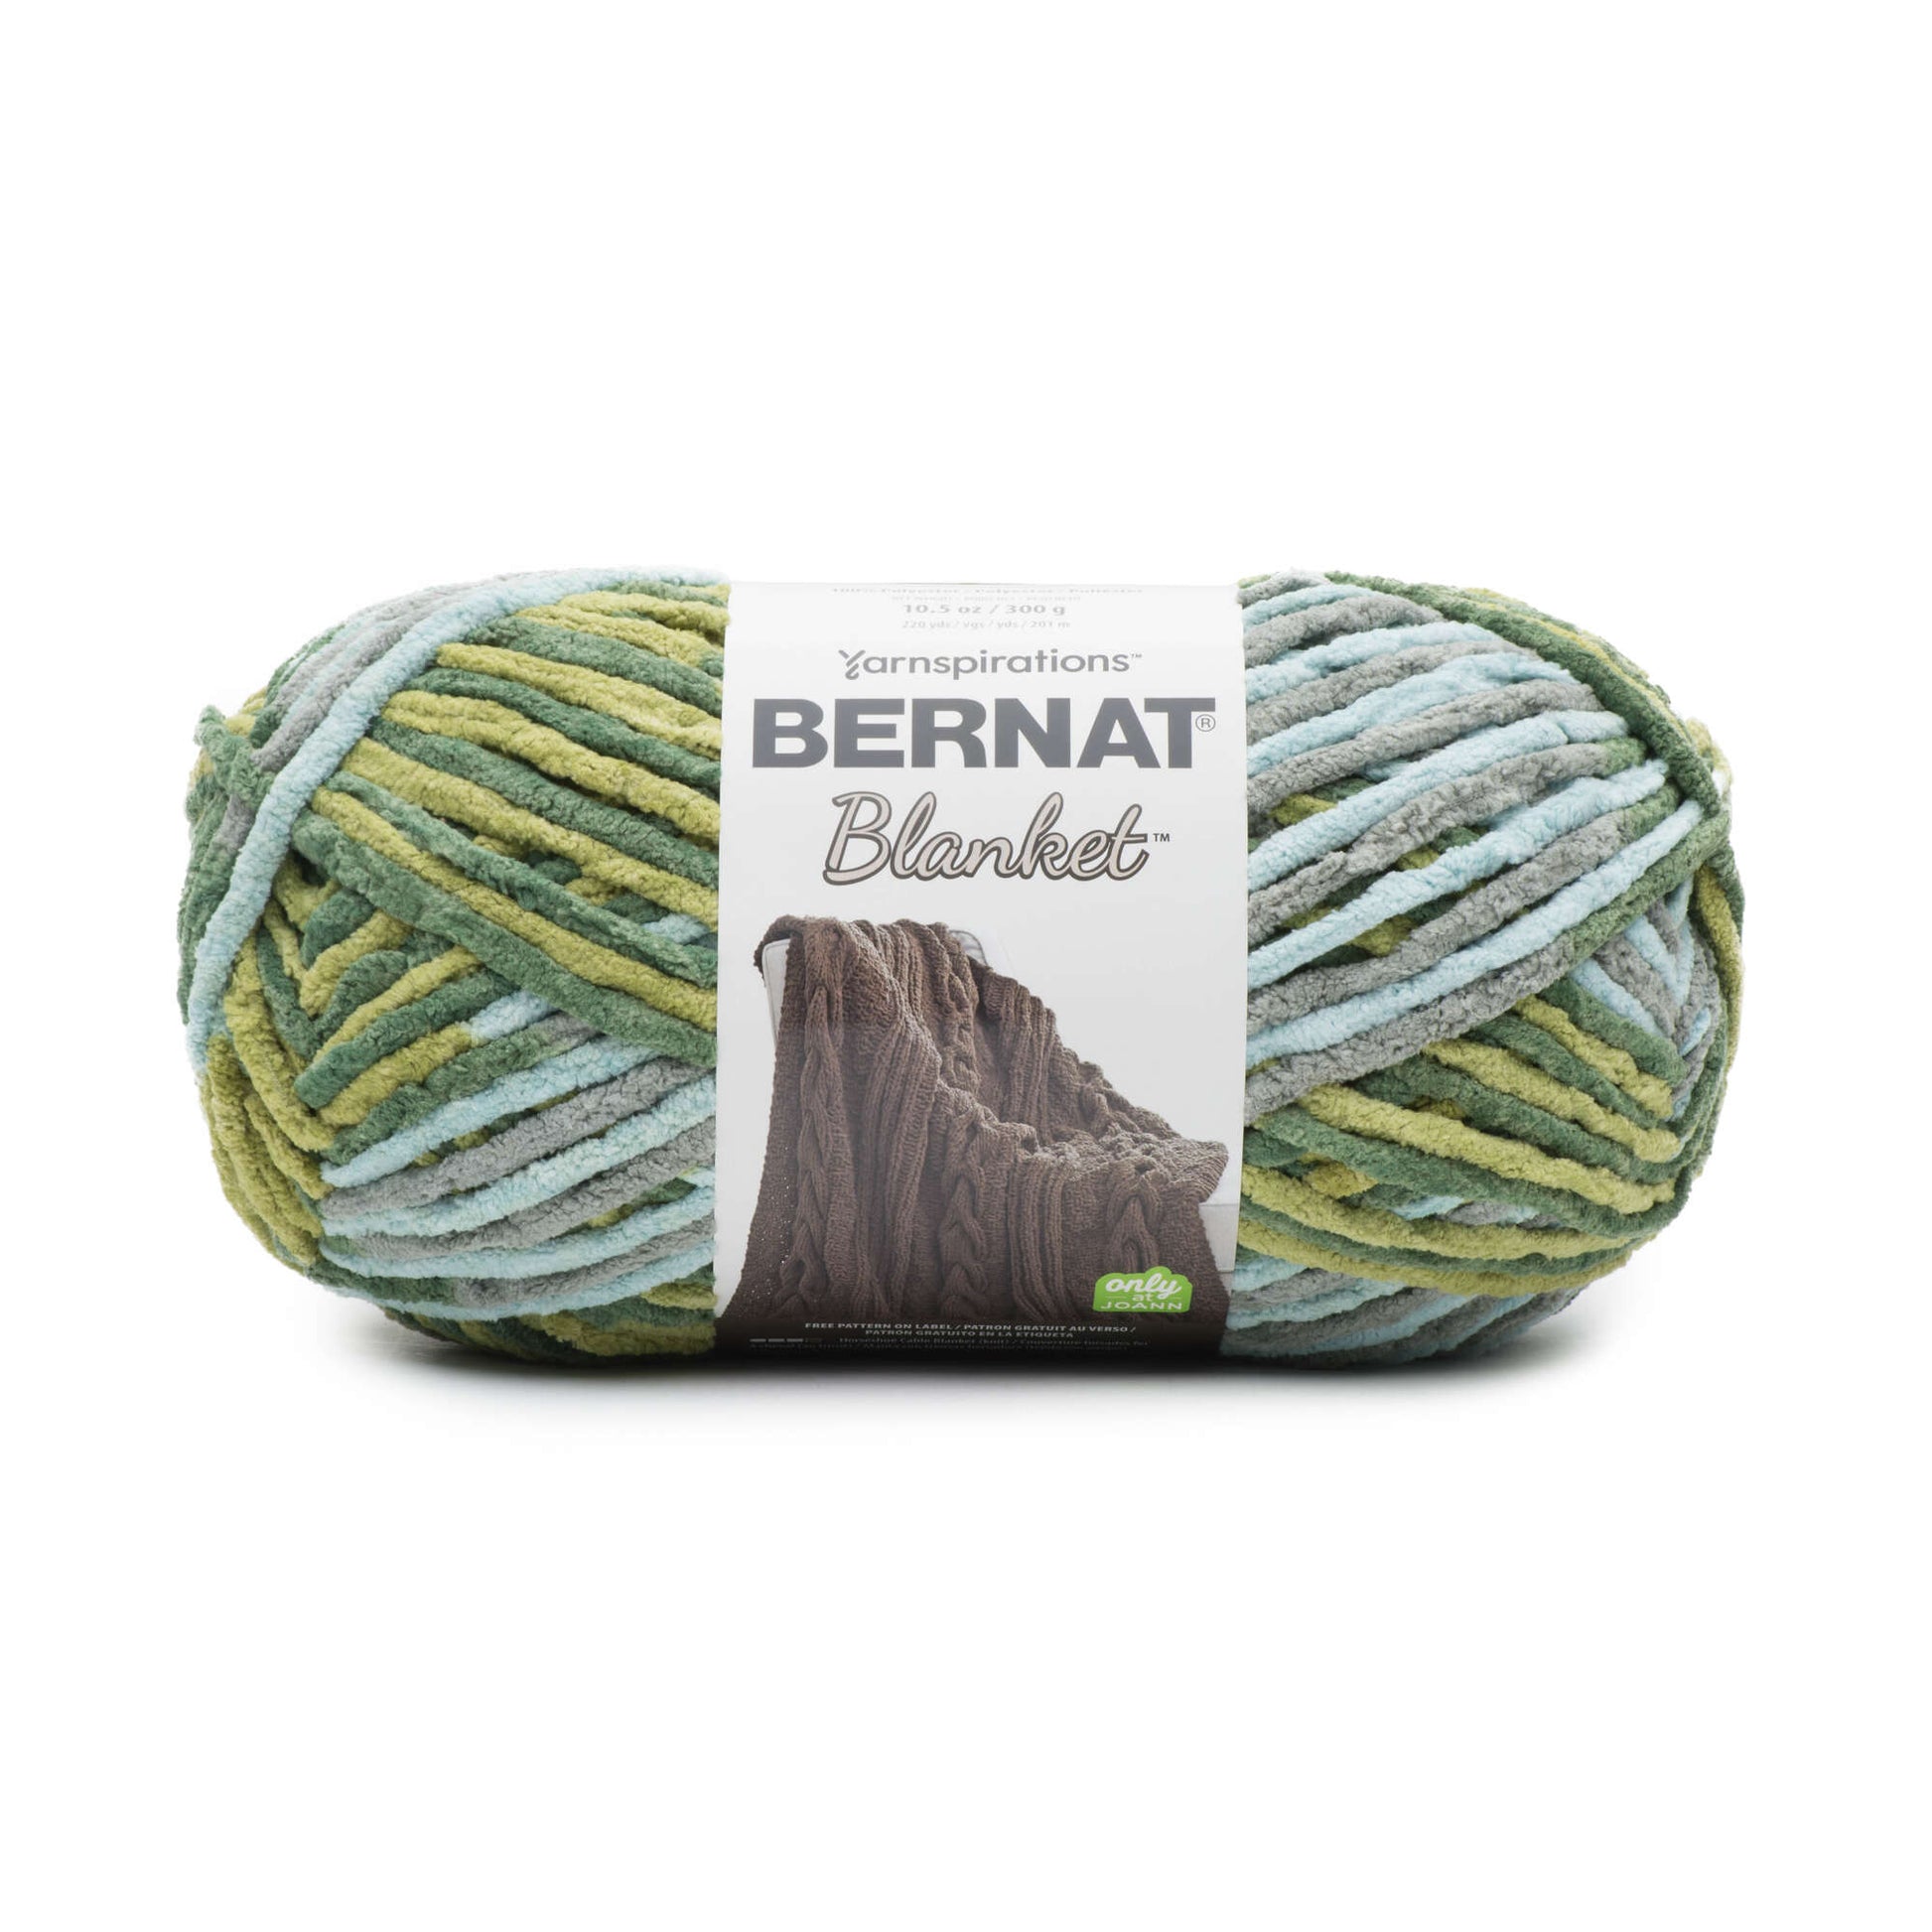 DIY Arm Knitting Kit for a blanket 35x50